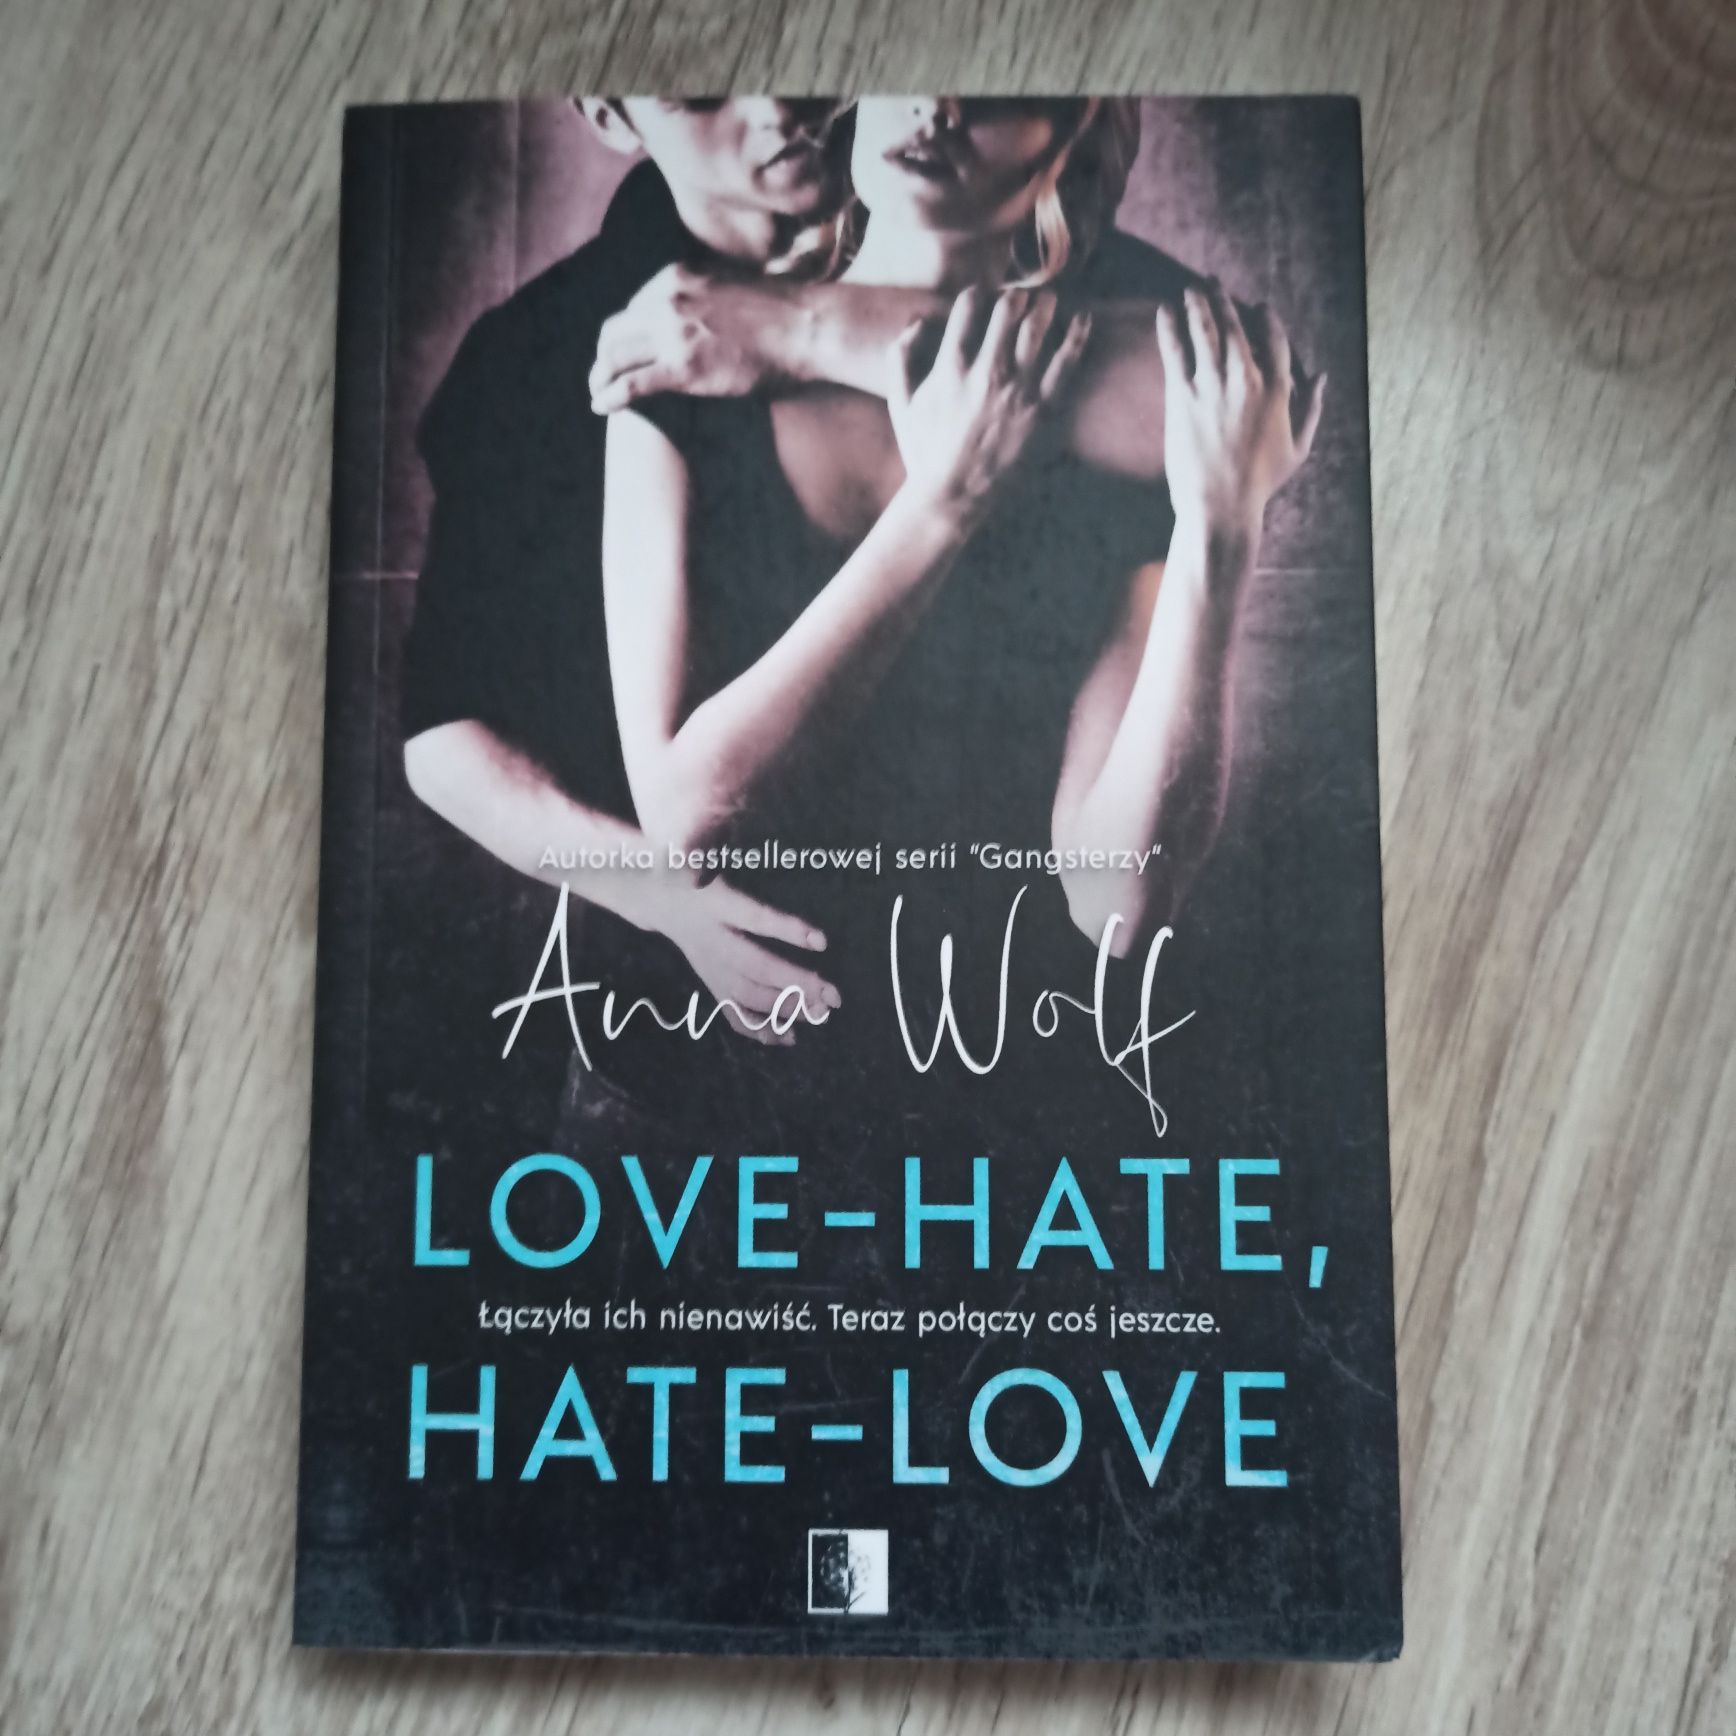 Love-hate, hate-love Anna Wolf